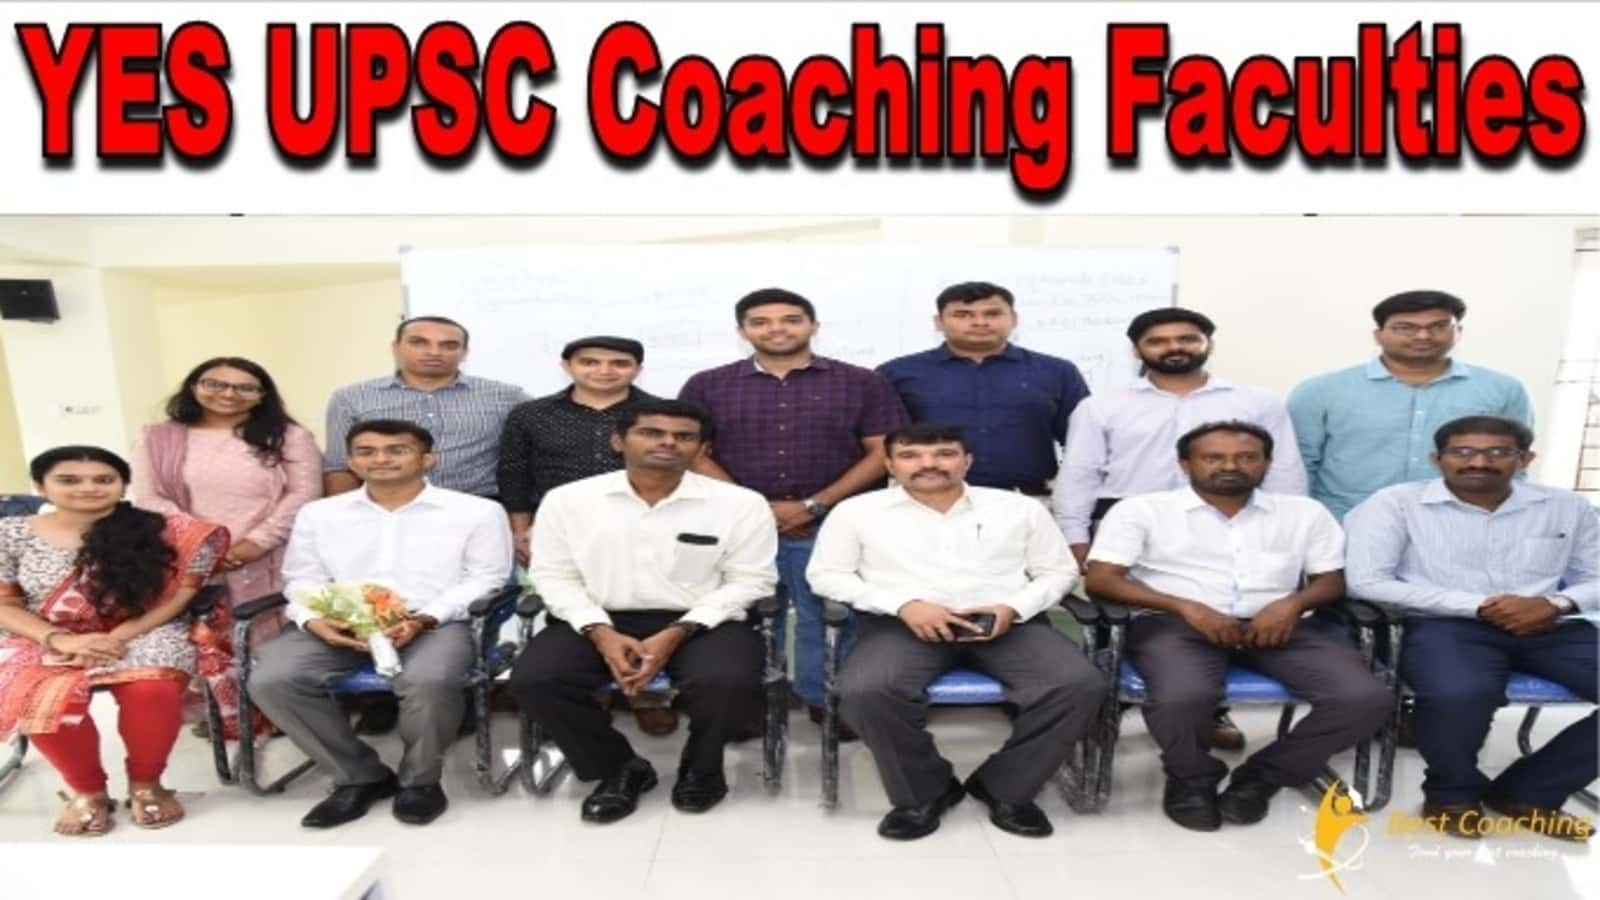 YES UPSC Coaching Faculties